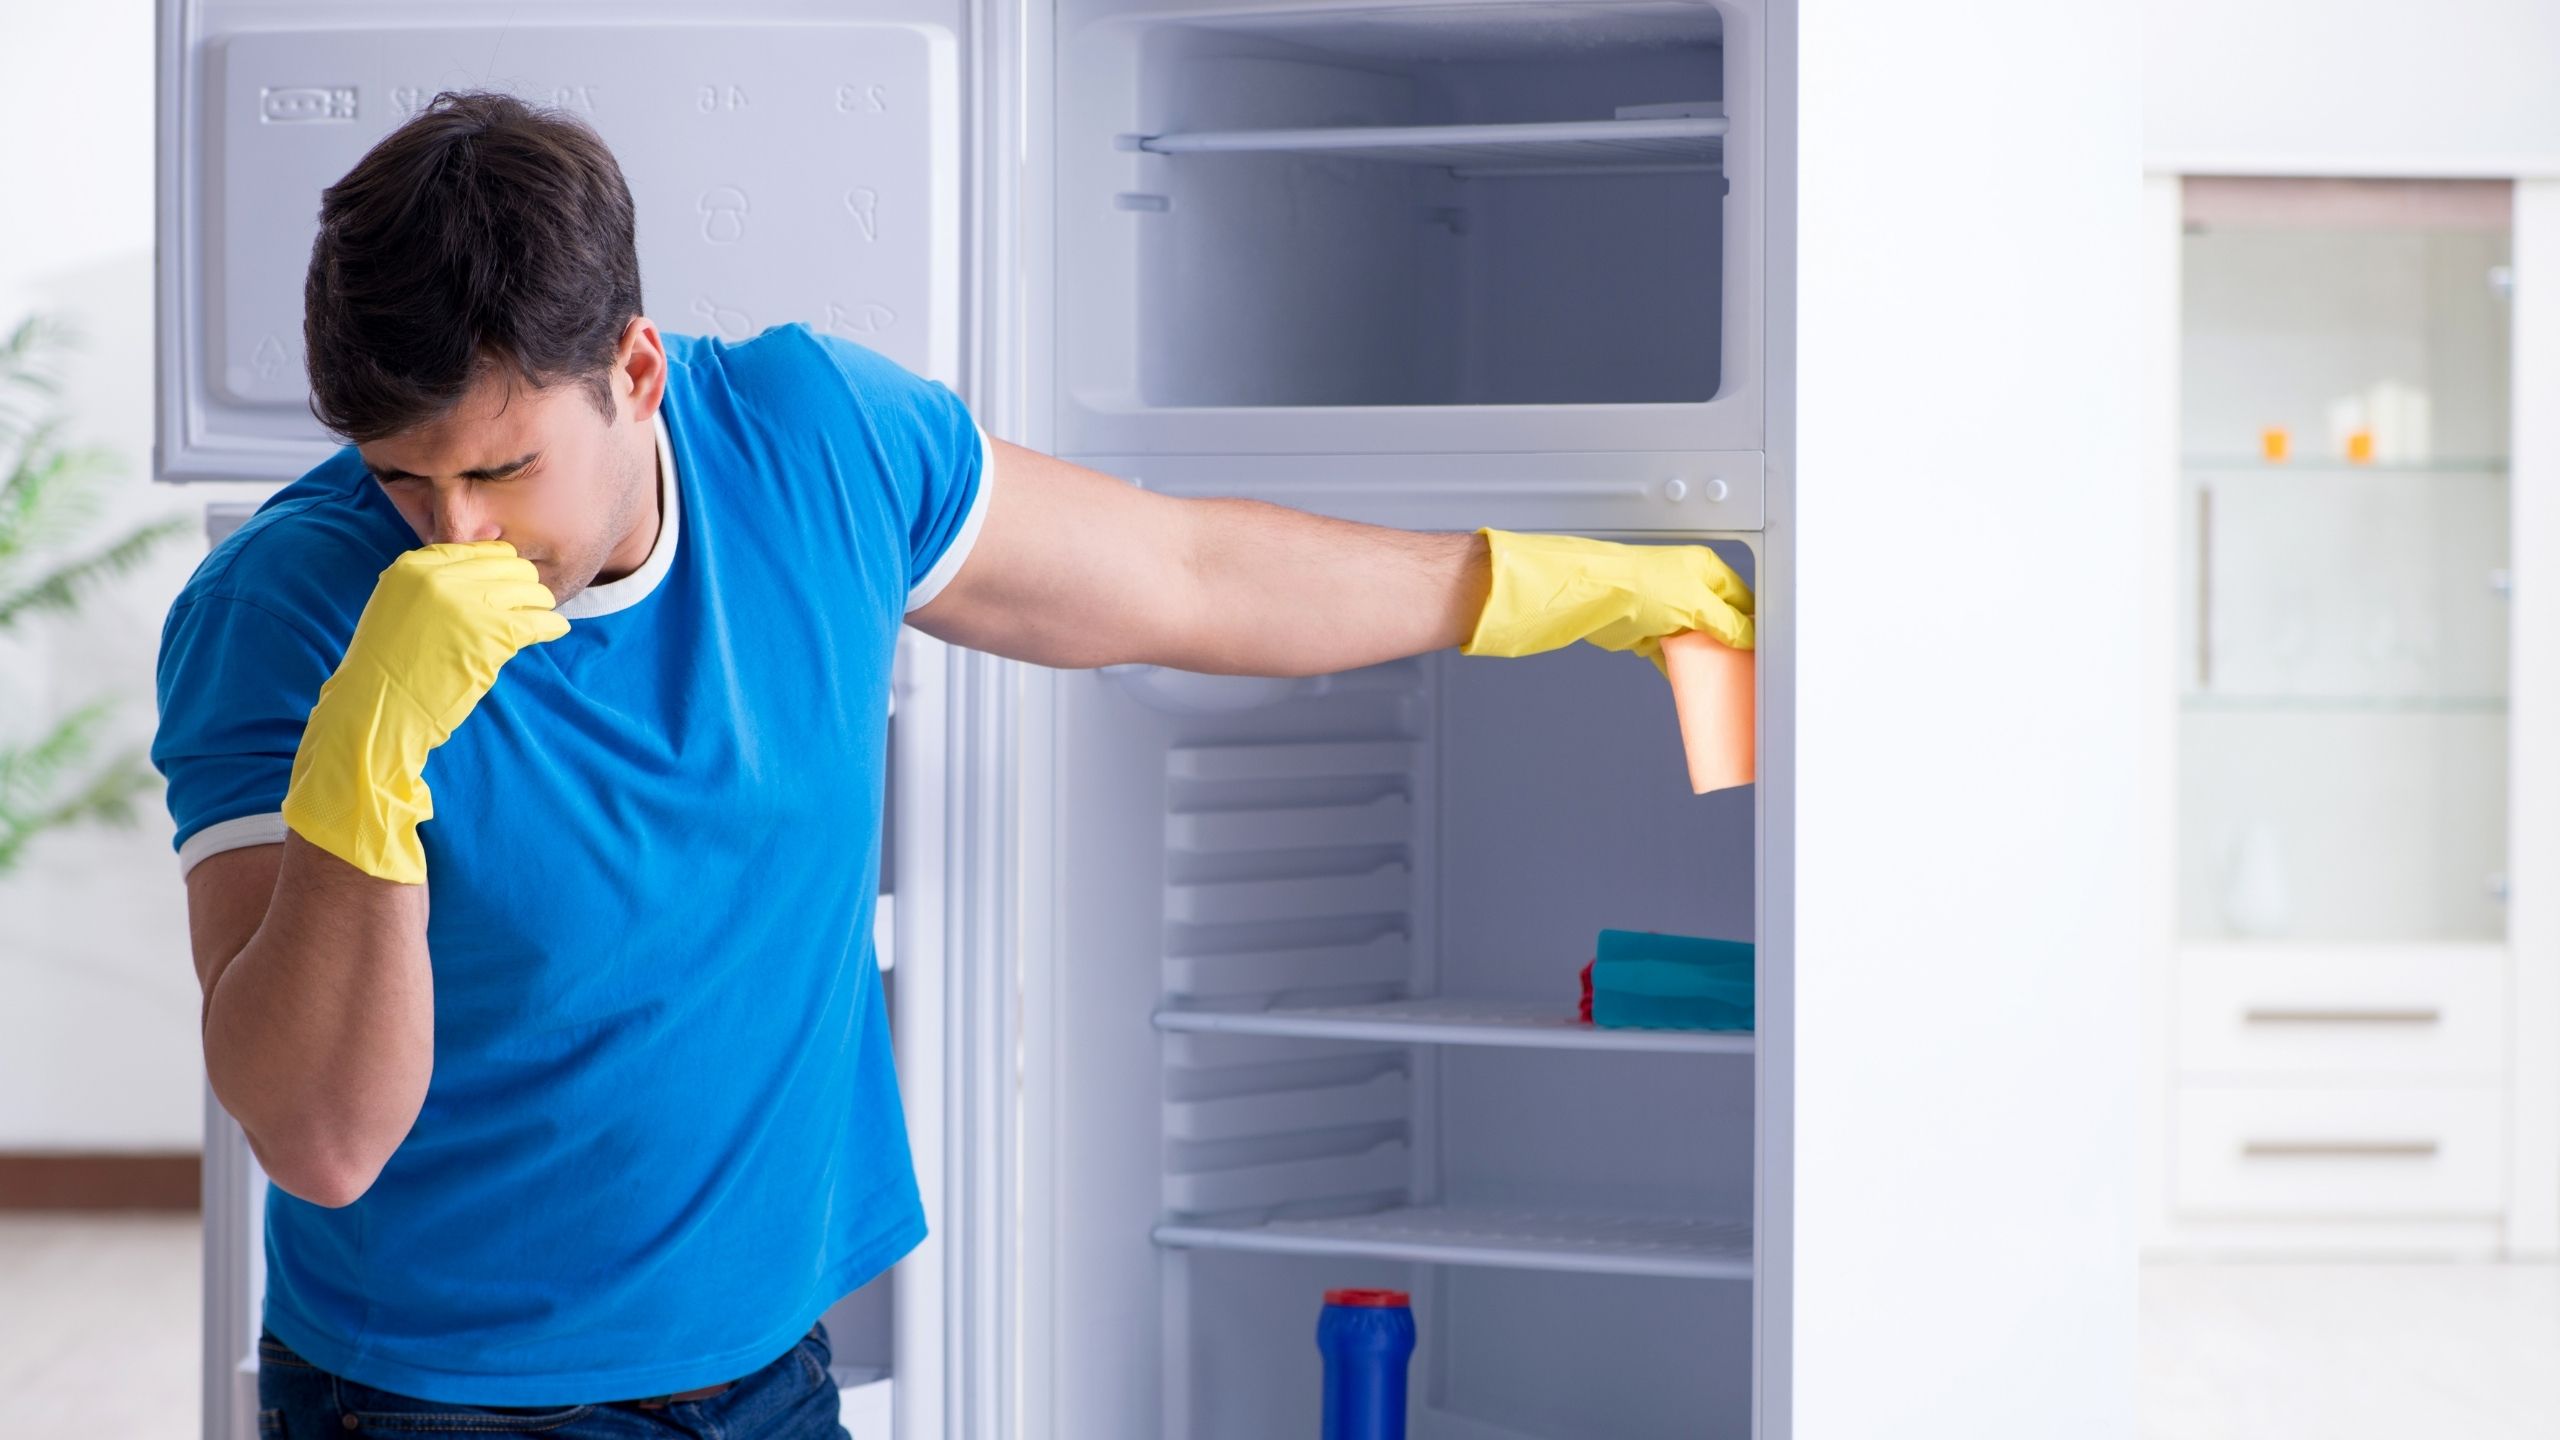 fridge smells bad even after cleaning